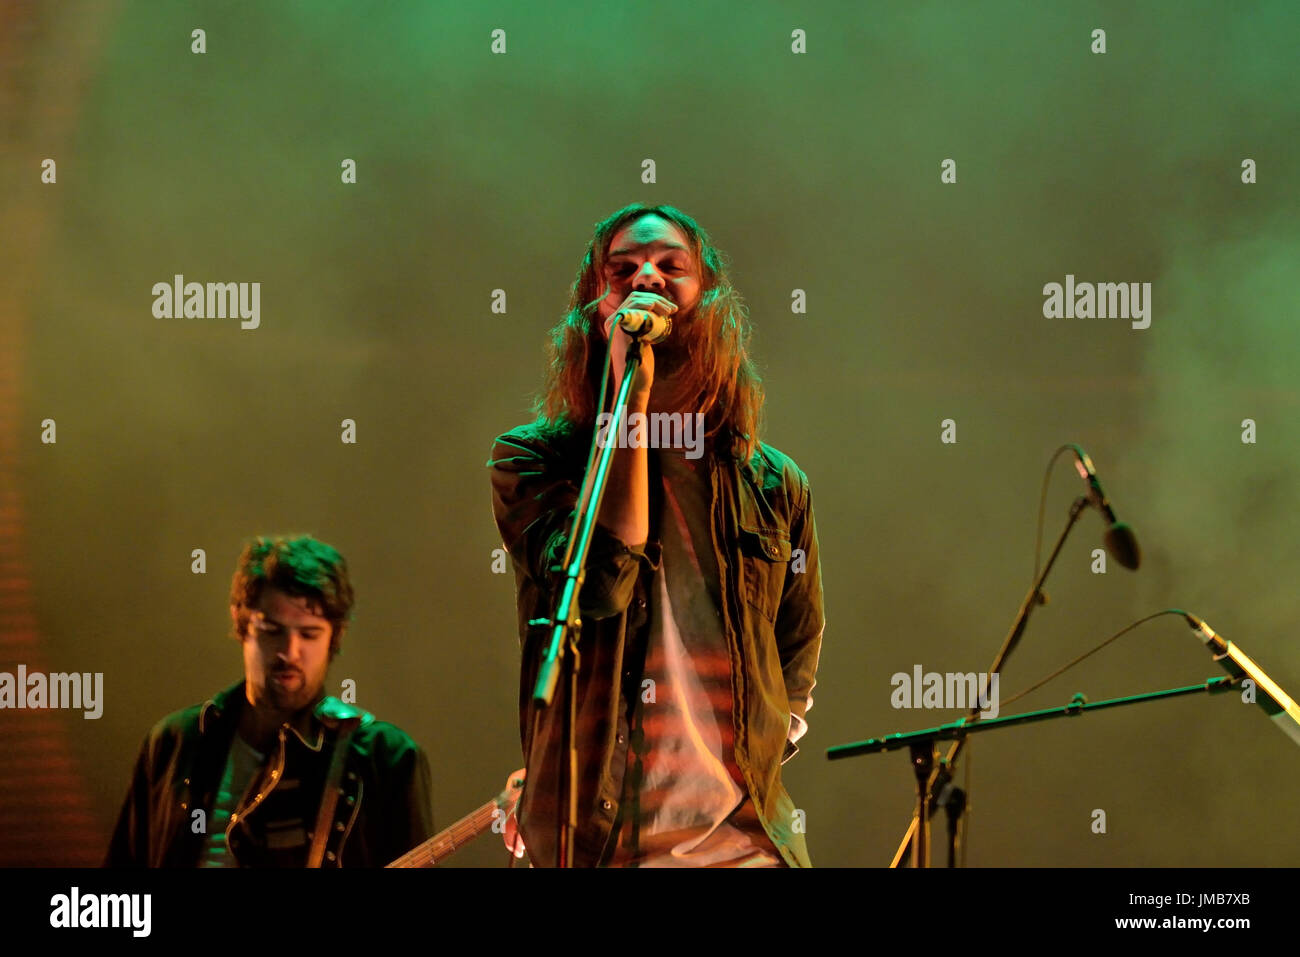 BARCELONA - JUN 2: Tame Impala (psychedelic band) perform in concert at Primavera Sound 2016 Festival on June 2, 2016 in Barcelona, Spain. Stock Photo